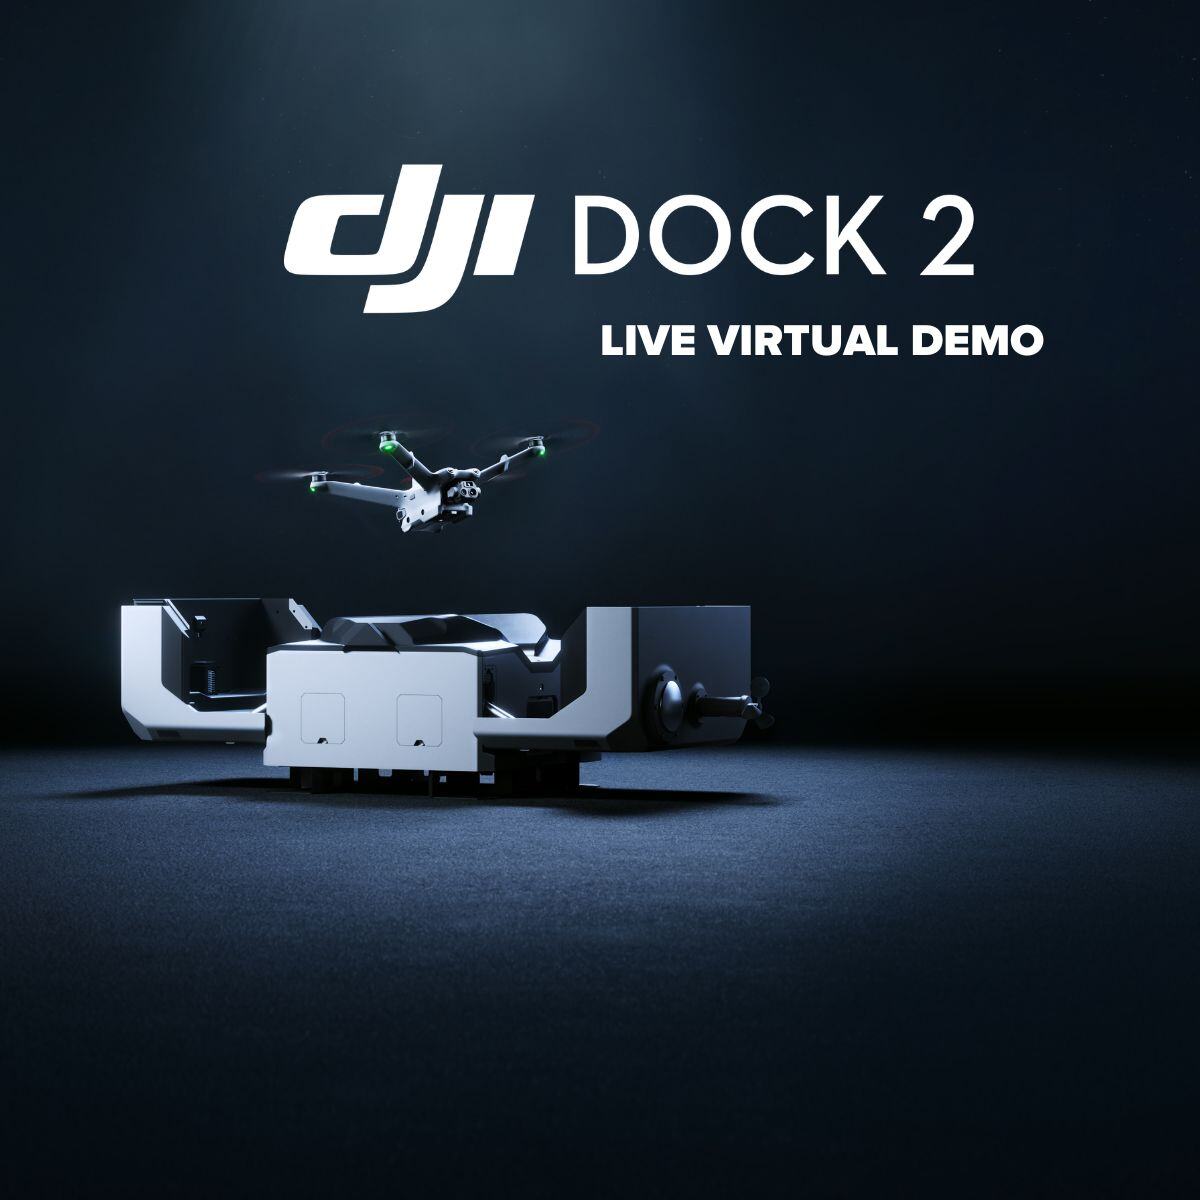 DJI Dock 2 Replay